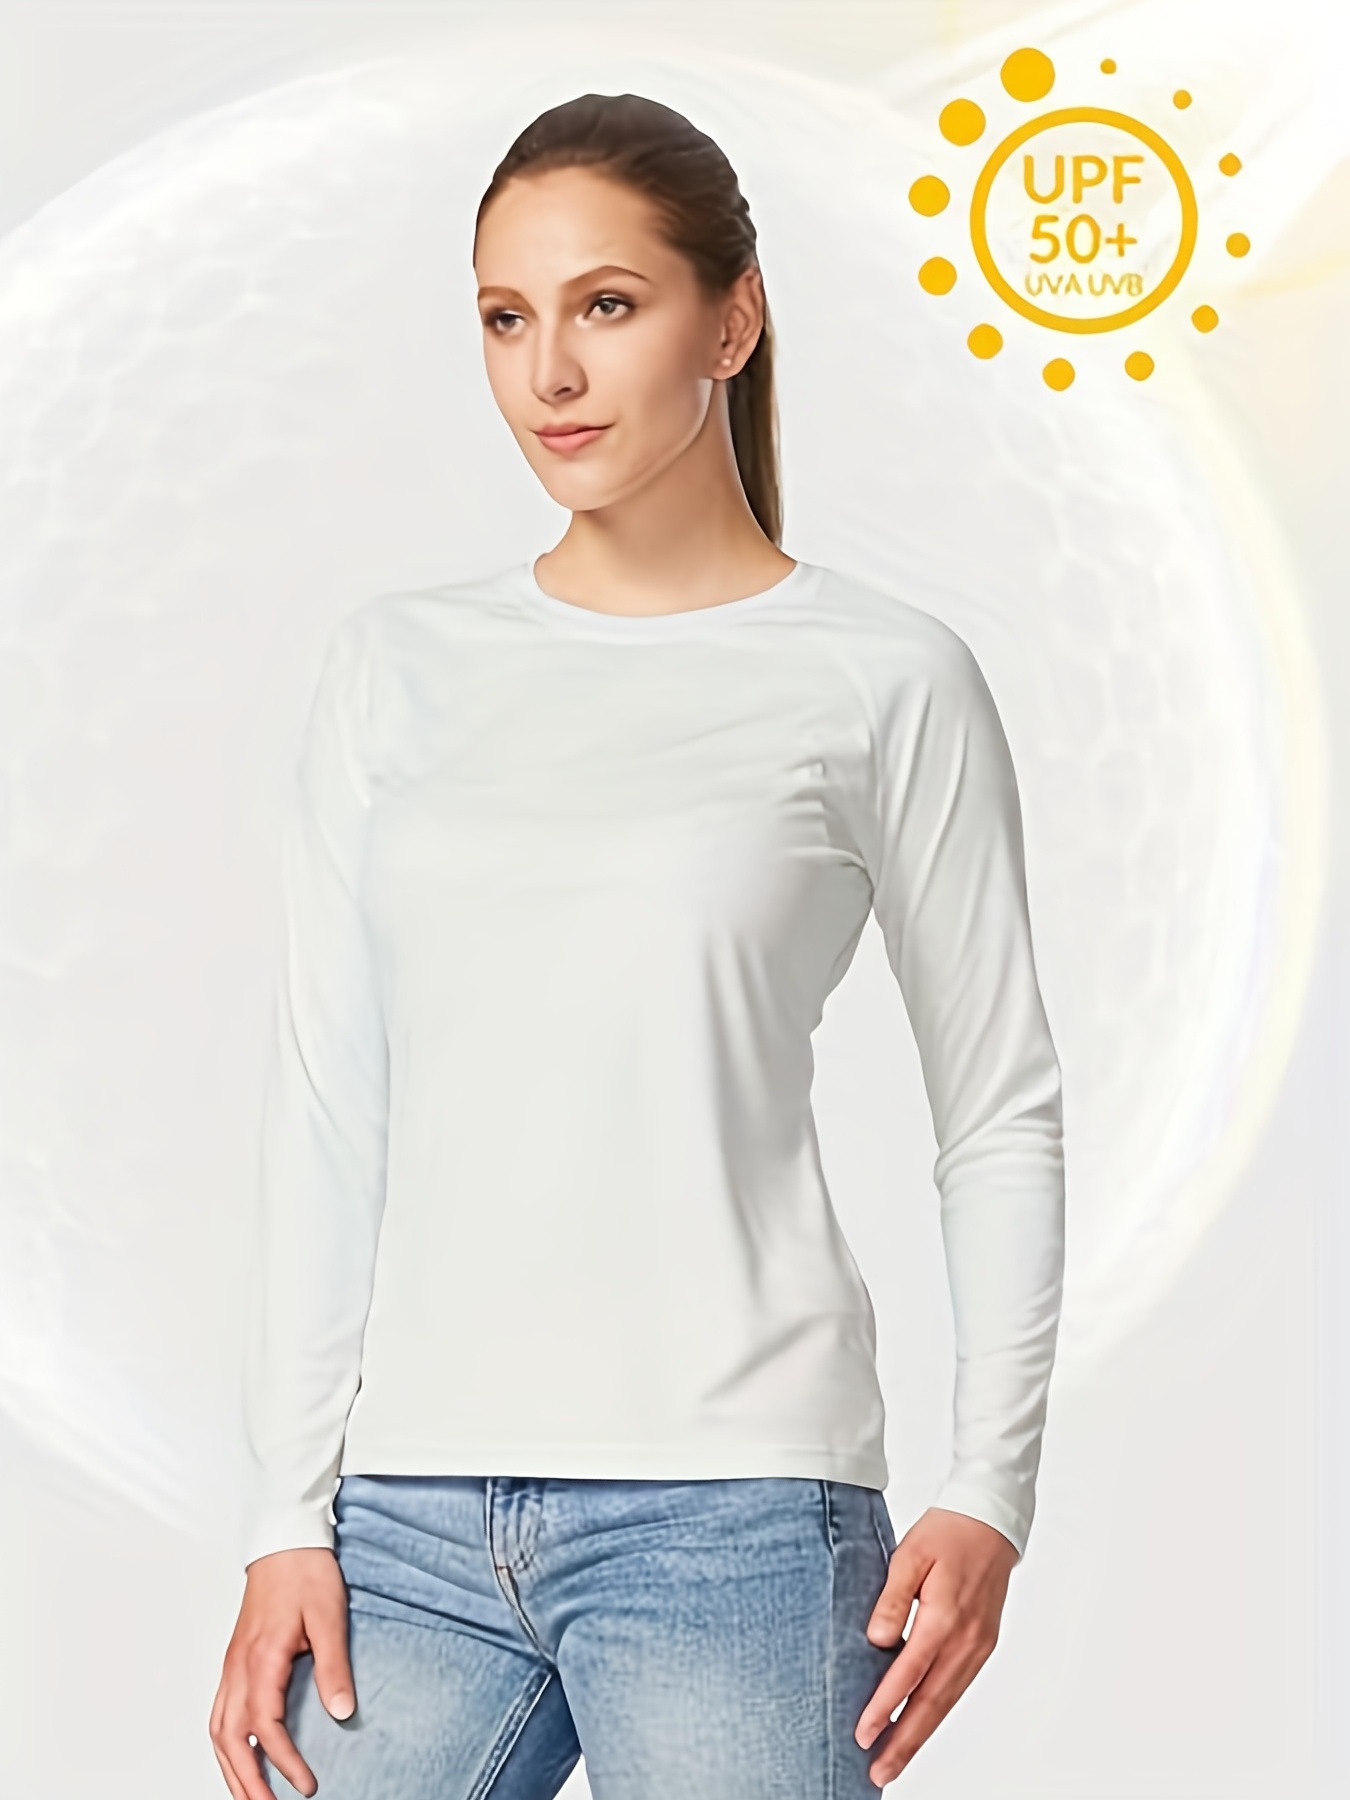  Womens UPF 50+ UV Sun Protection T-Shirt Long Sleeve Fishing  Hiking Performance Shirts